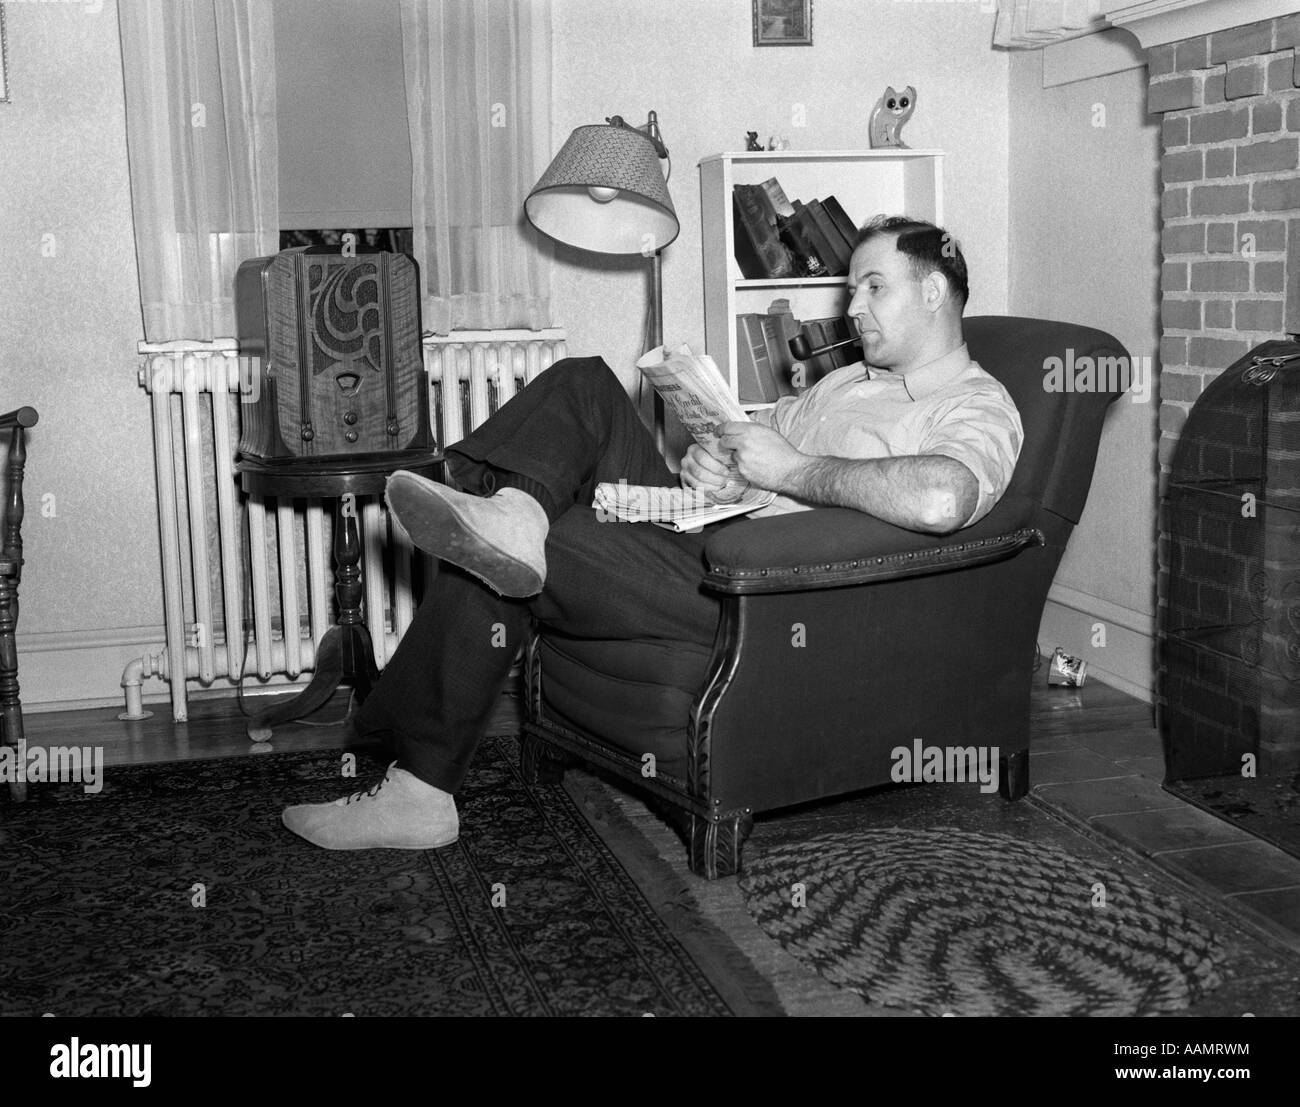 1950s-man-sitting-in-chair-in-living-room-smoking-pipe-reading-paper-AAMRWM.jpg